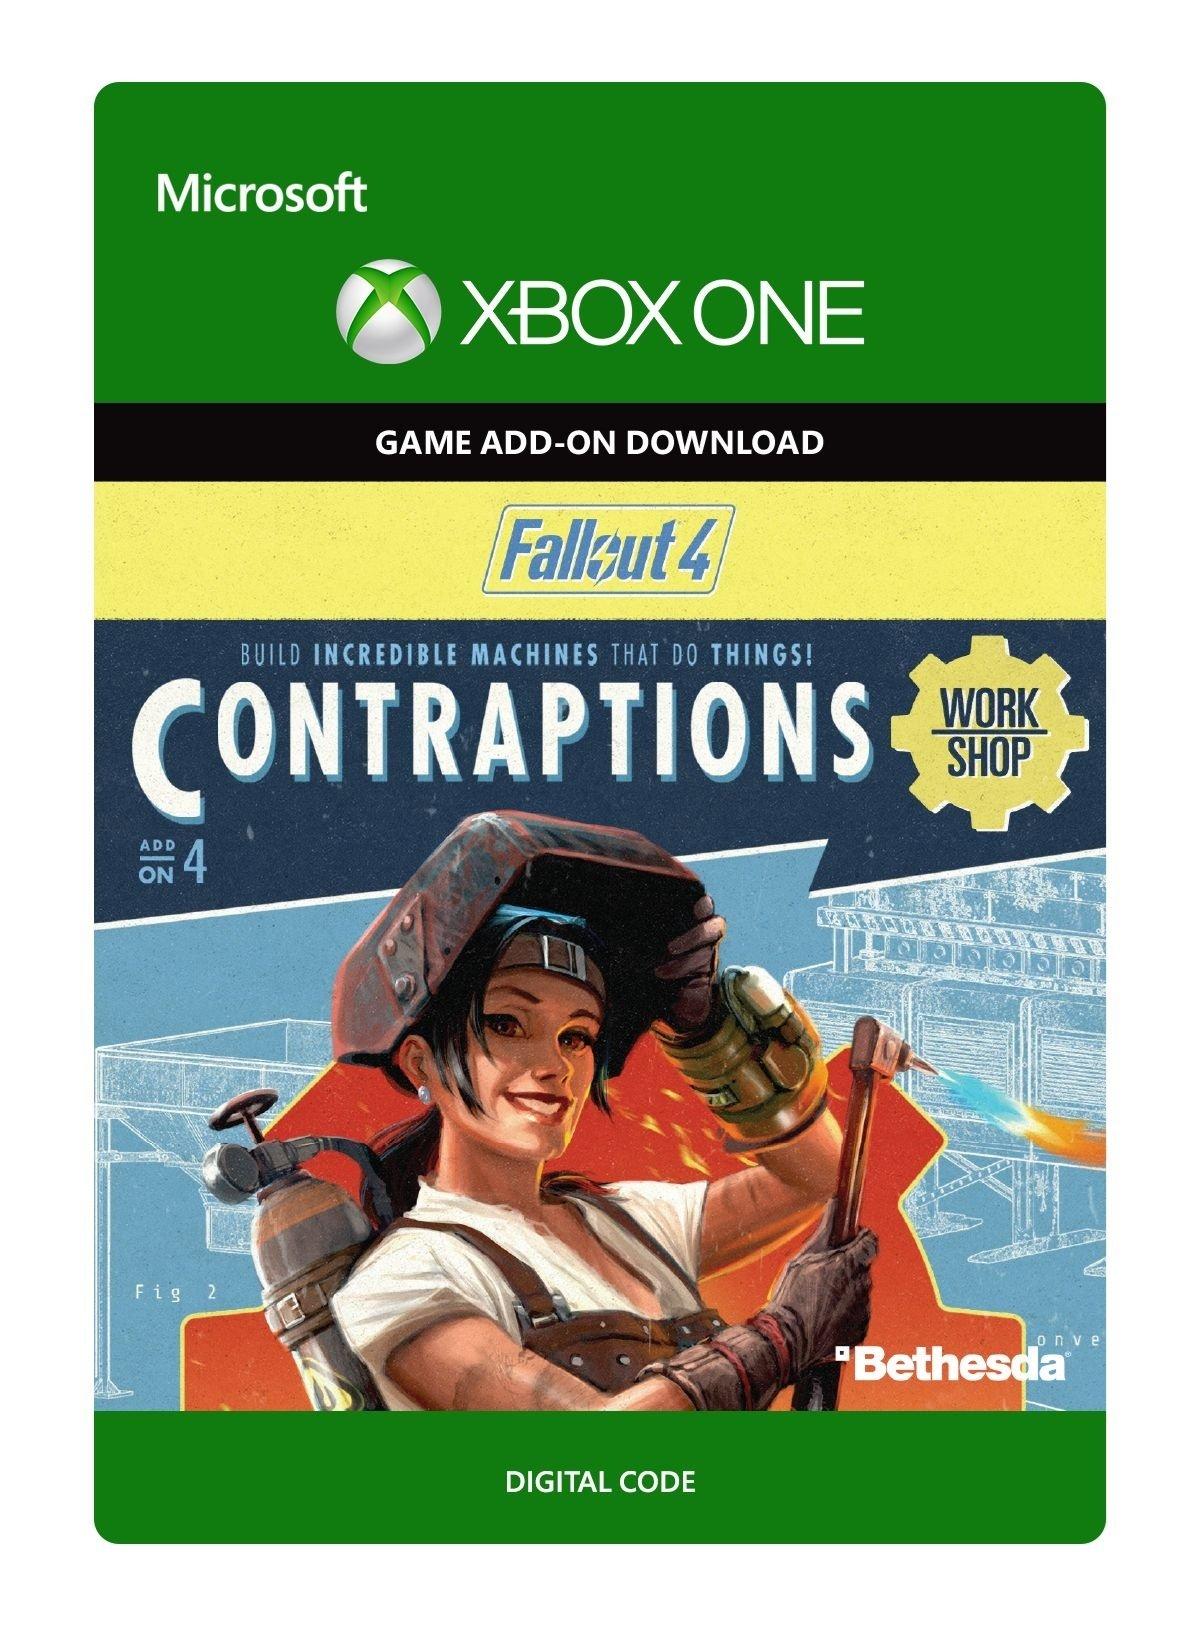 Fallout 4: Contraptions Workshop Xbox One Add-On (Digitale Code) | 7D4-00147 (4aee3eba-ce6d-4bba-b04f-c37cae7cf885)